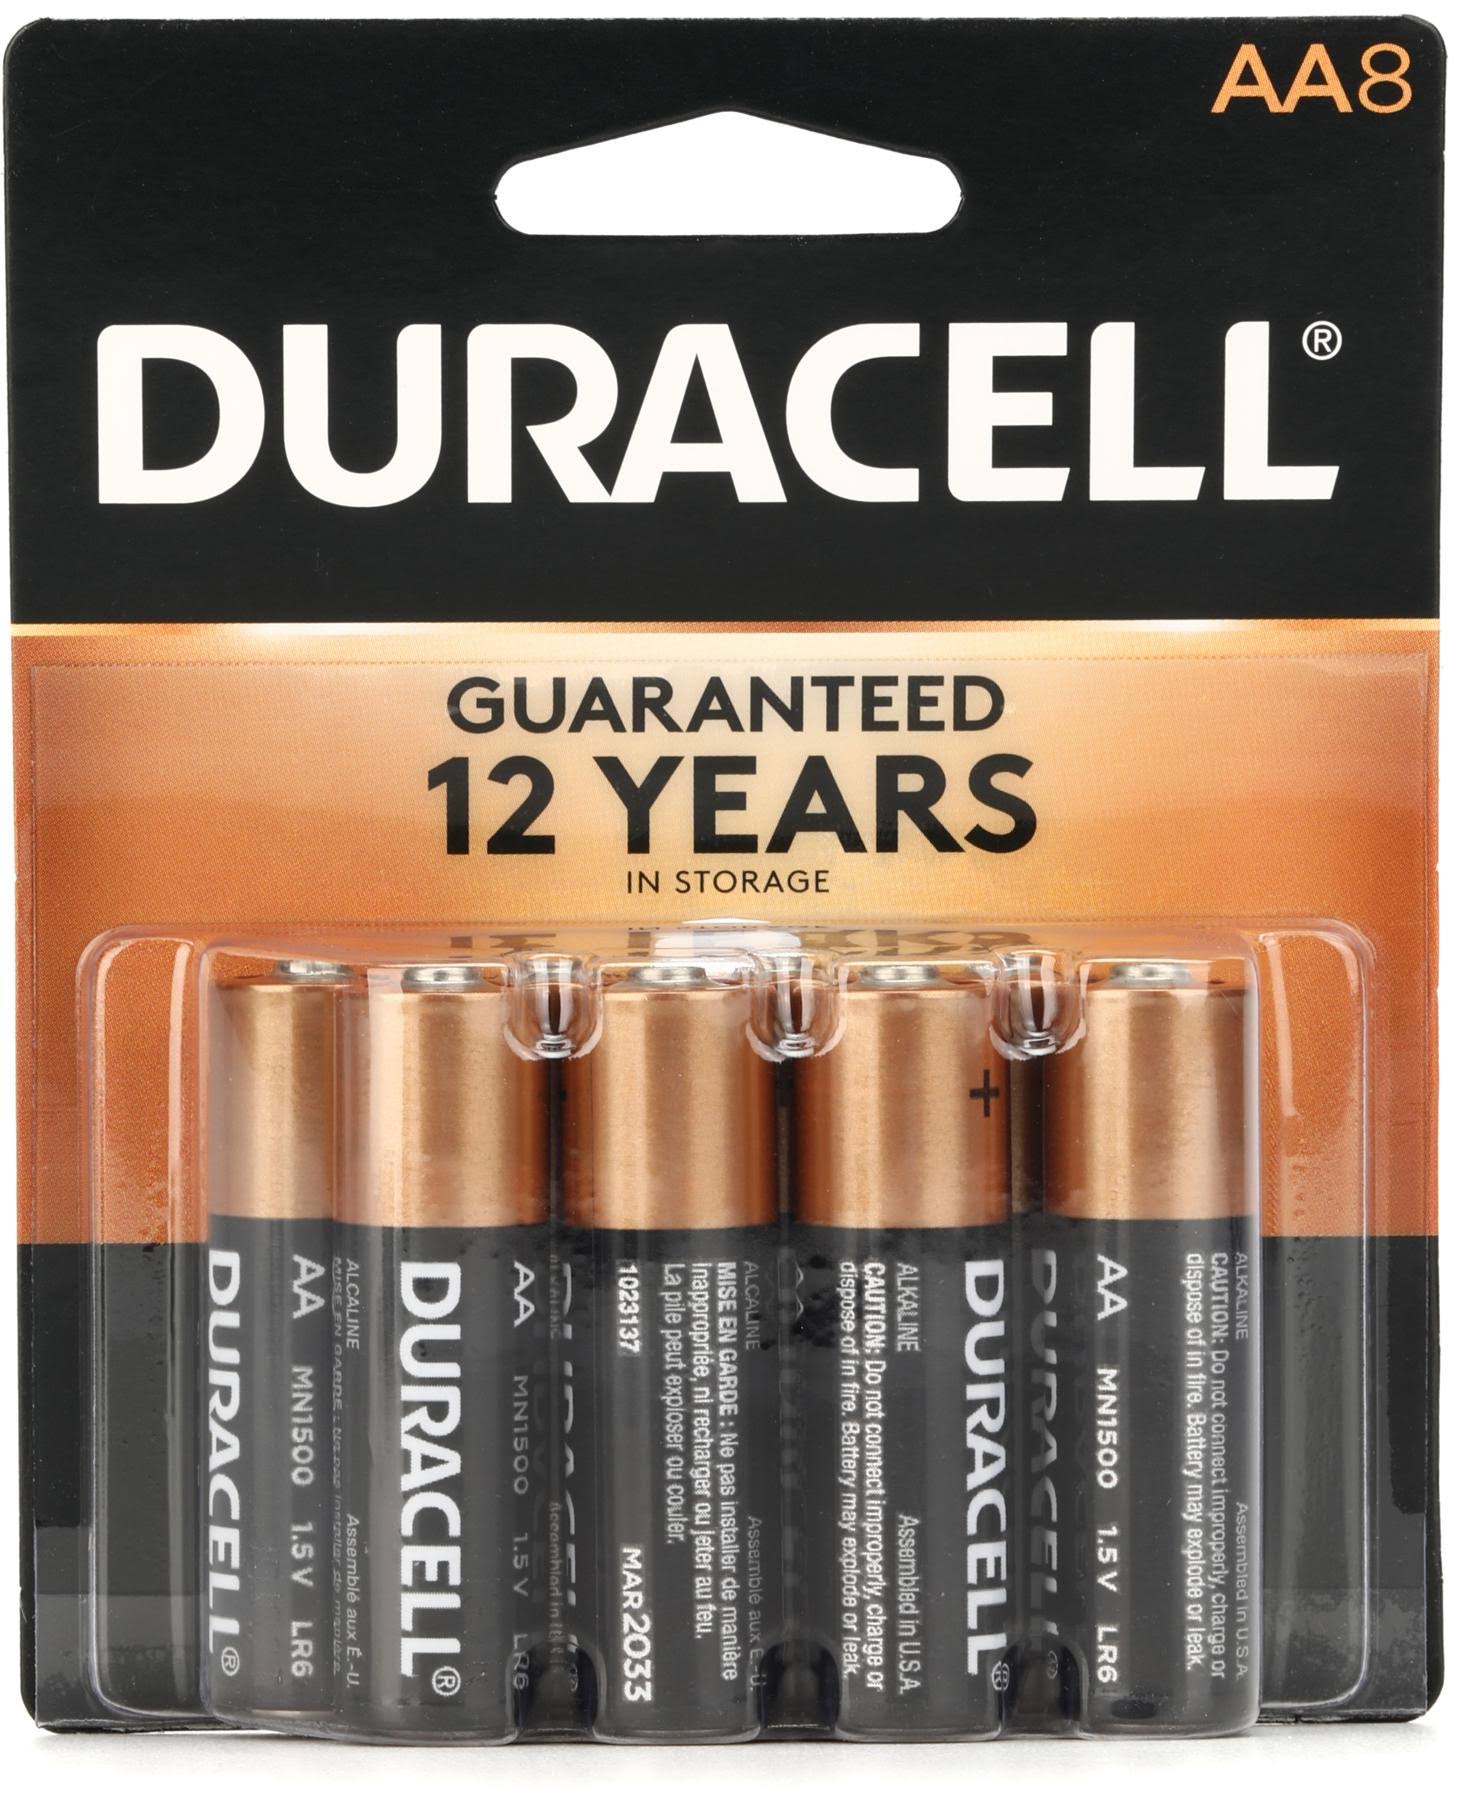 Duracell Coppertop AA 1.5V Alkaline Batteries - 8 Pack